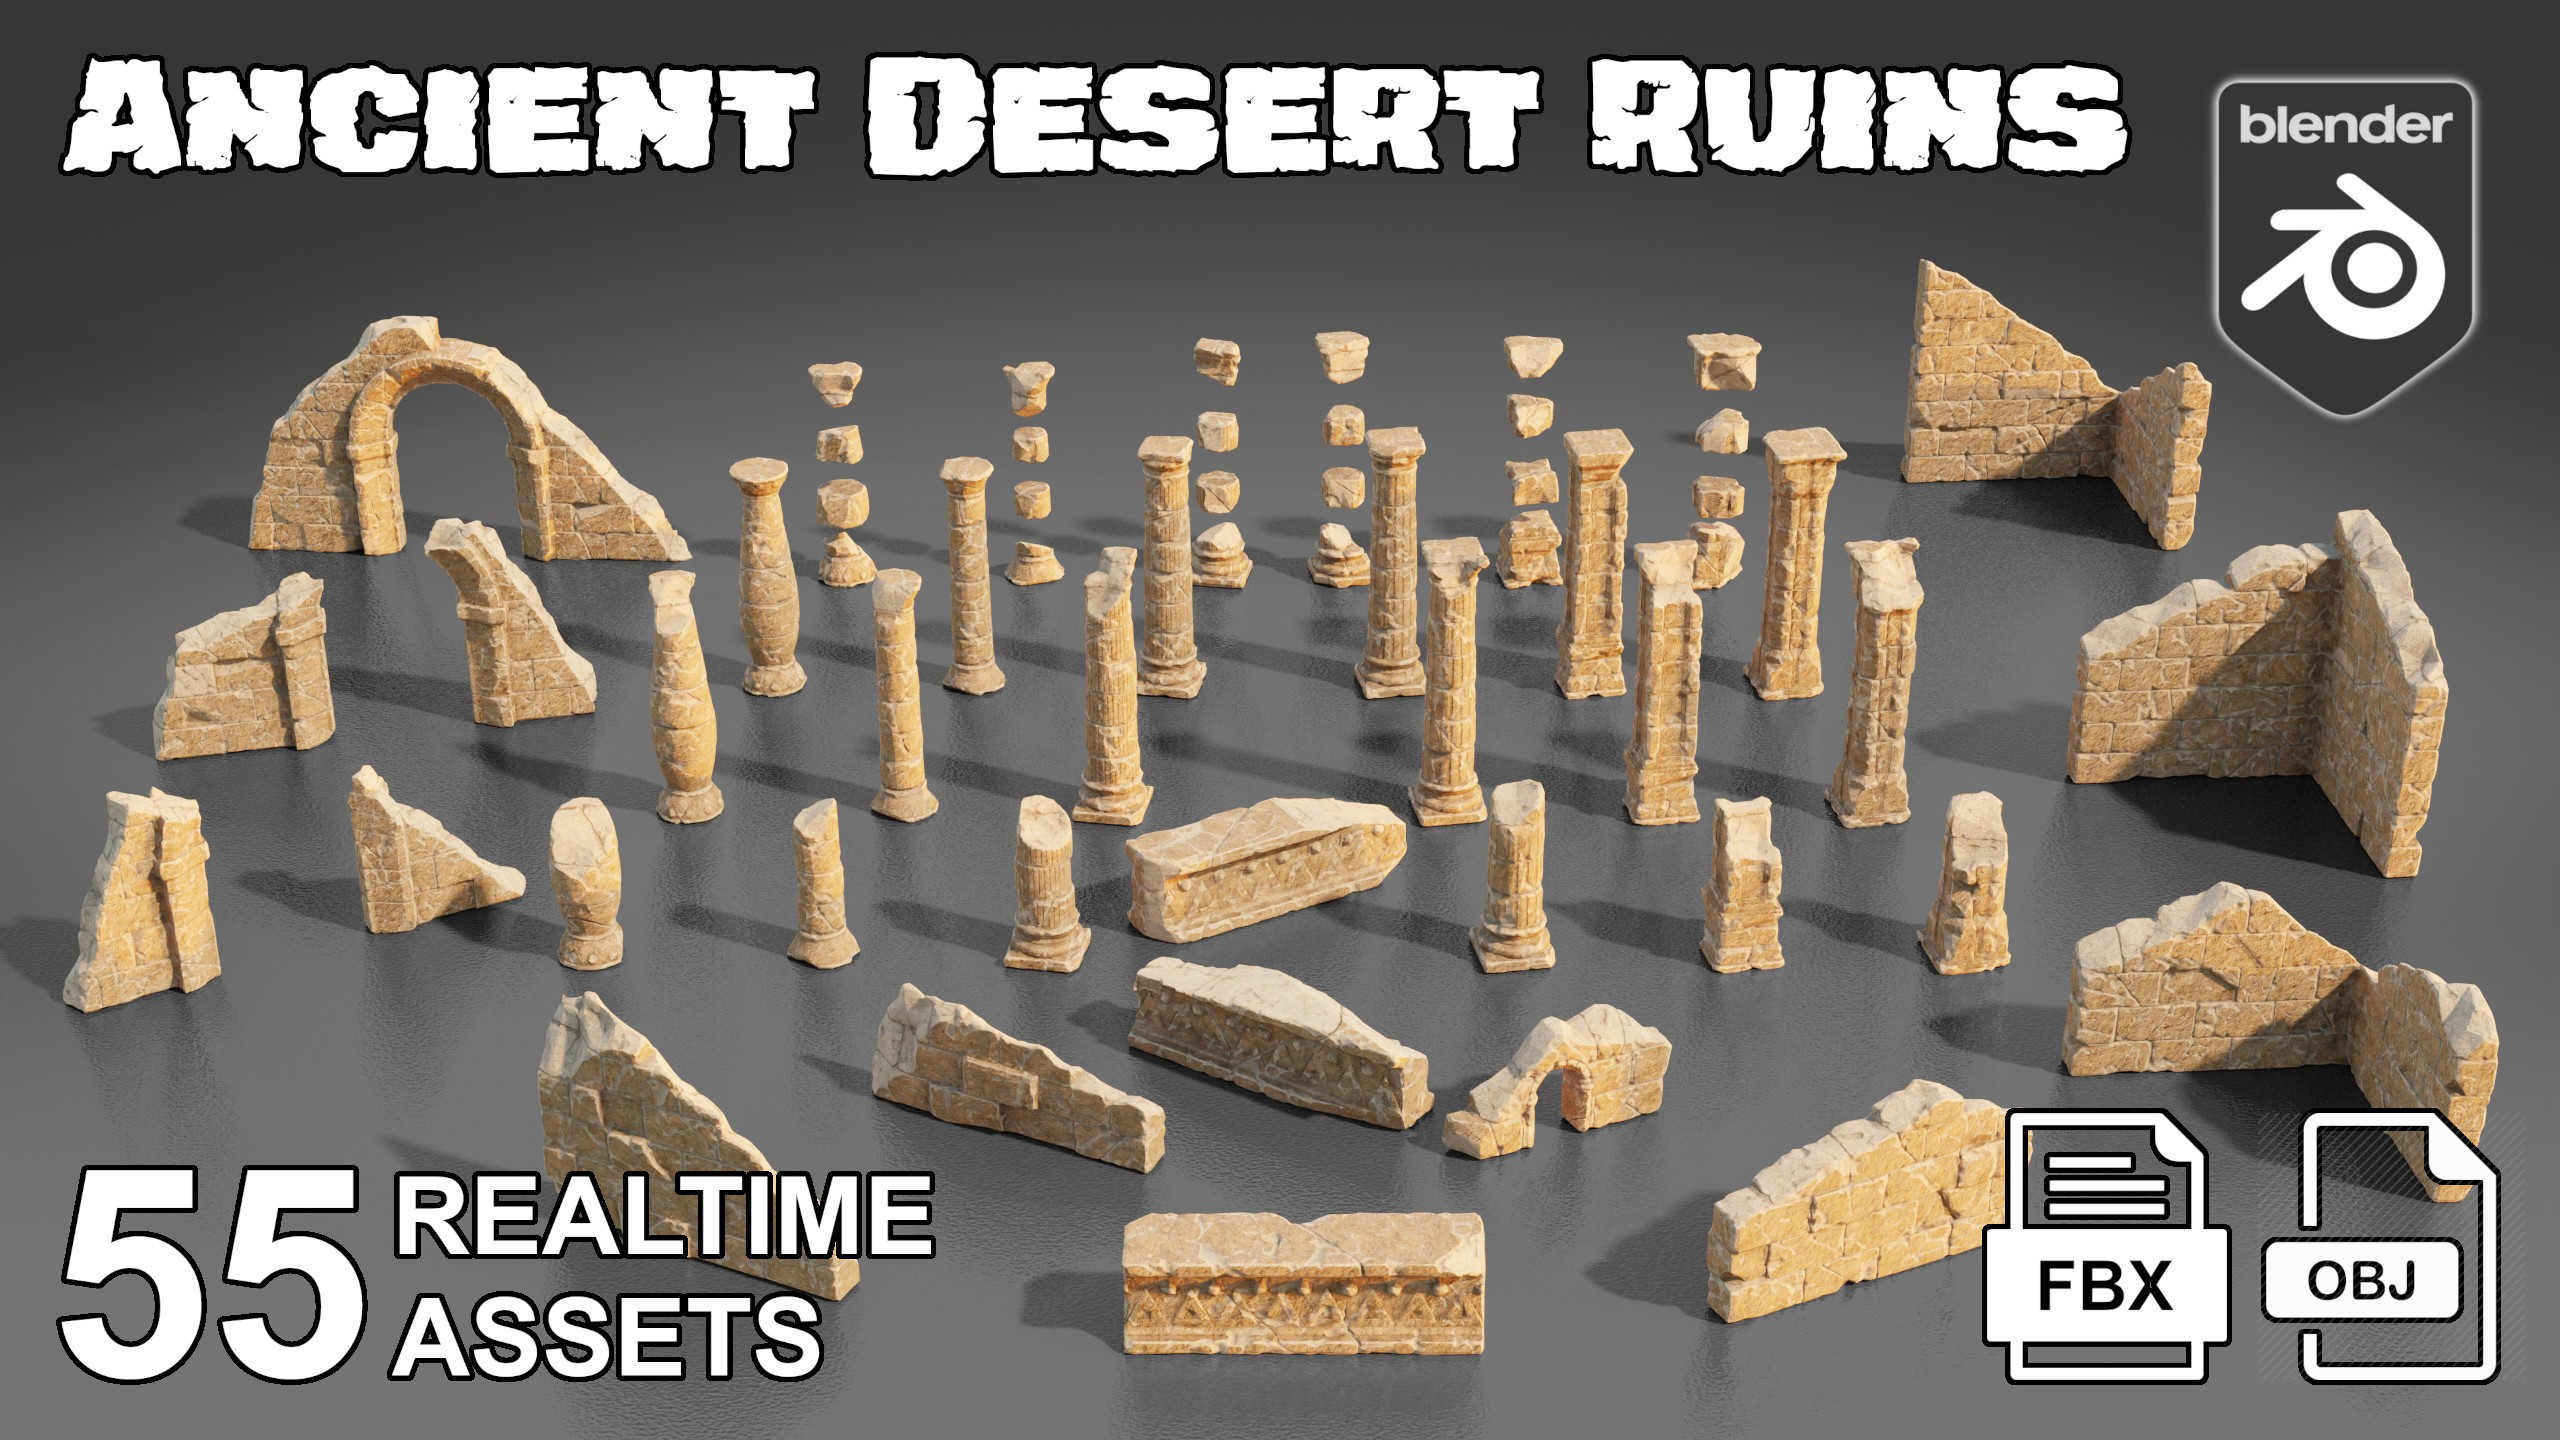 https://www.artstation.com/marketplace/p/z20a2/ancient-desert-ruins?utm_source=artstation&amp;utm_medium=referral&amp;utm_campaign=homepage&amp;utm_term=marketplace